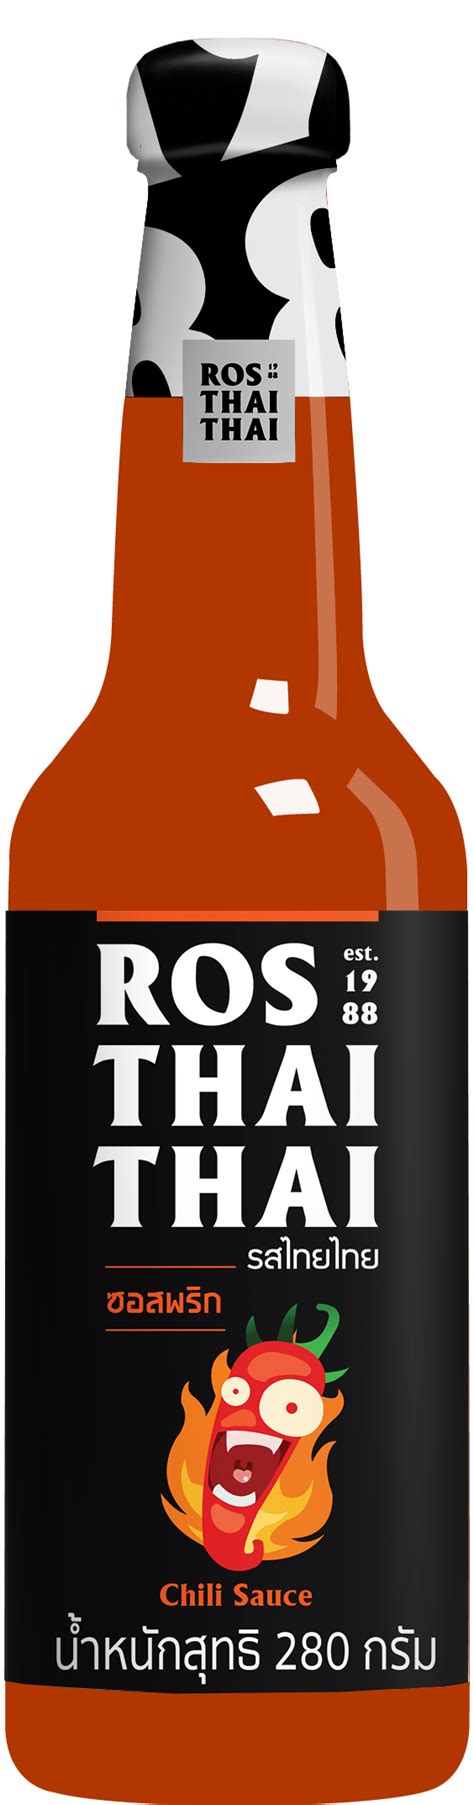 Ros Thai Thai หน้า 2 Food Blessing 1988 Co Ltd